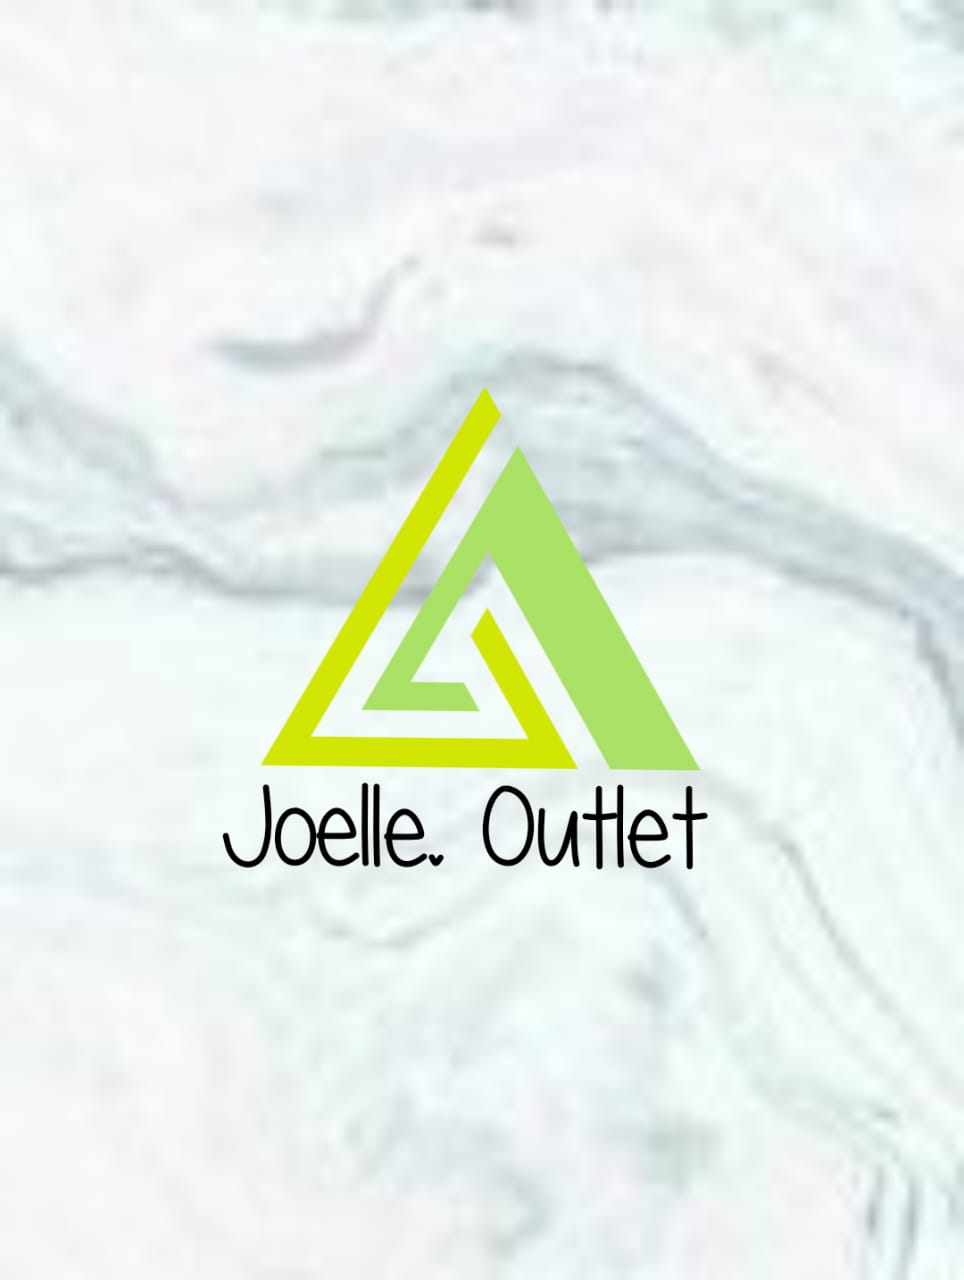 Joelle.outlet